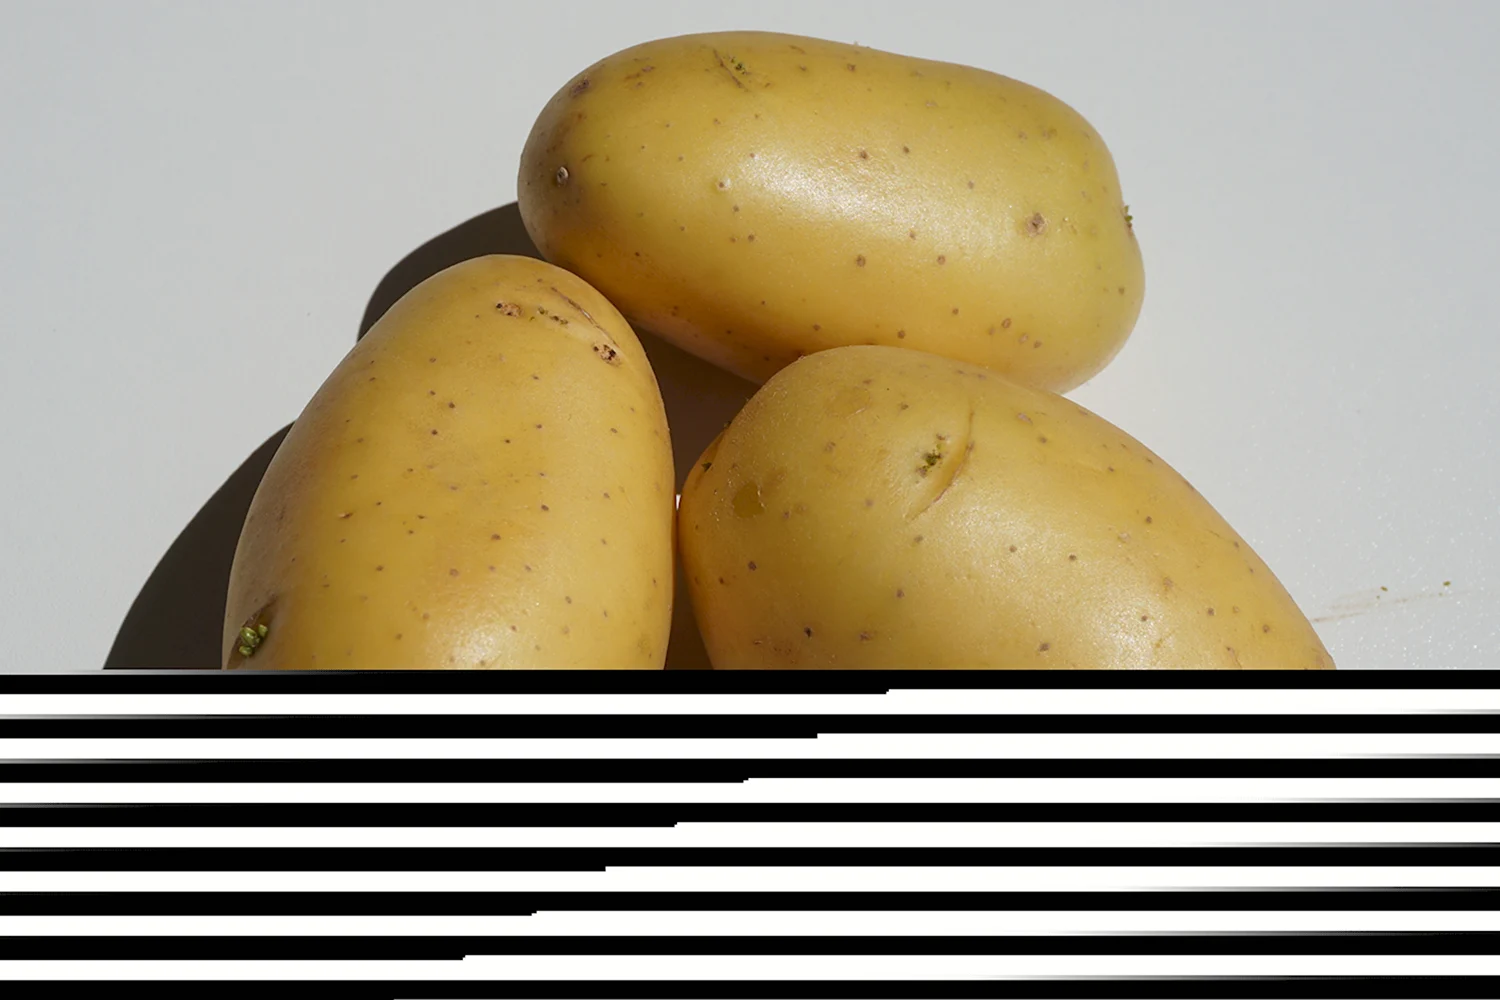 Картошка с овощами